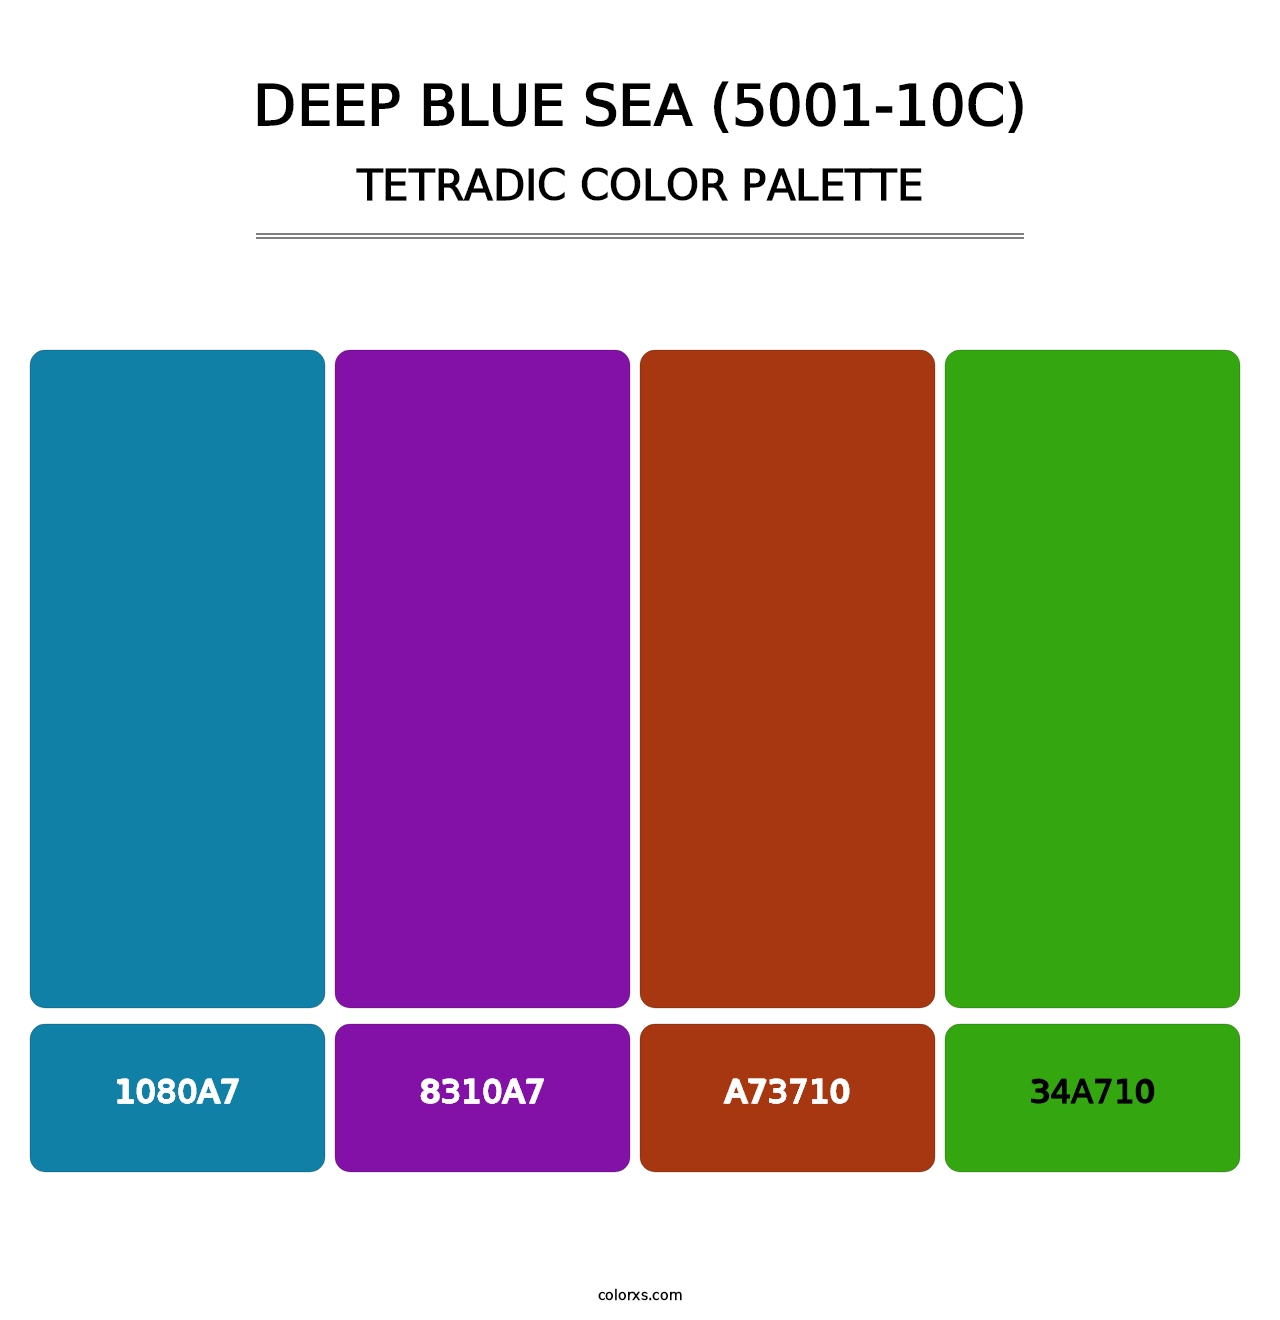 Deep Blue Sea (5001-10C) - Tetradic Color Palette